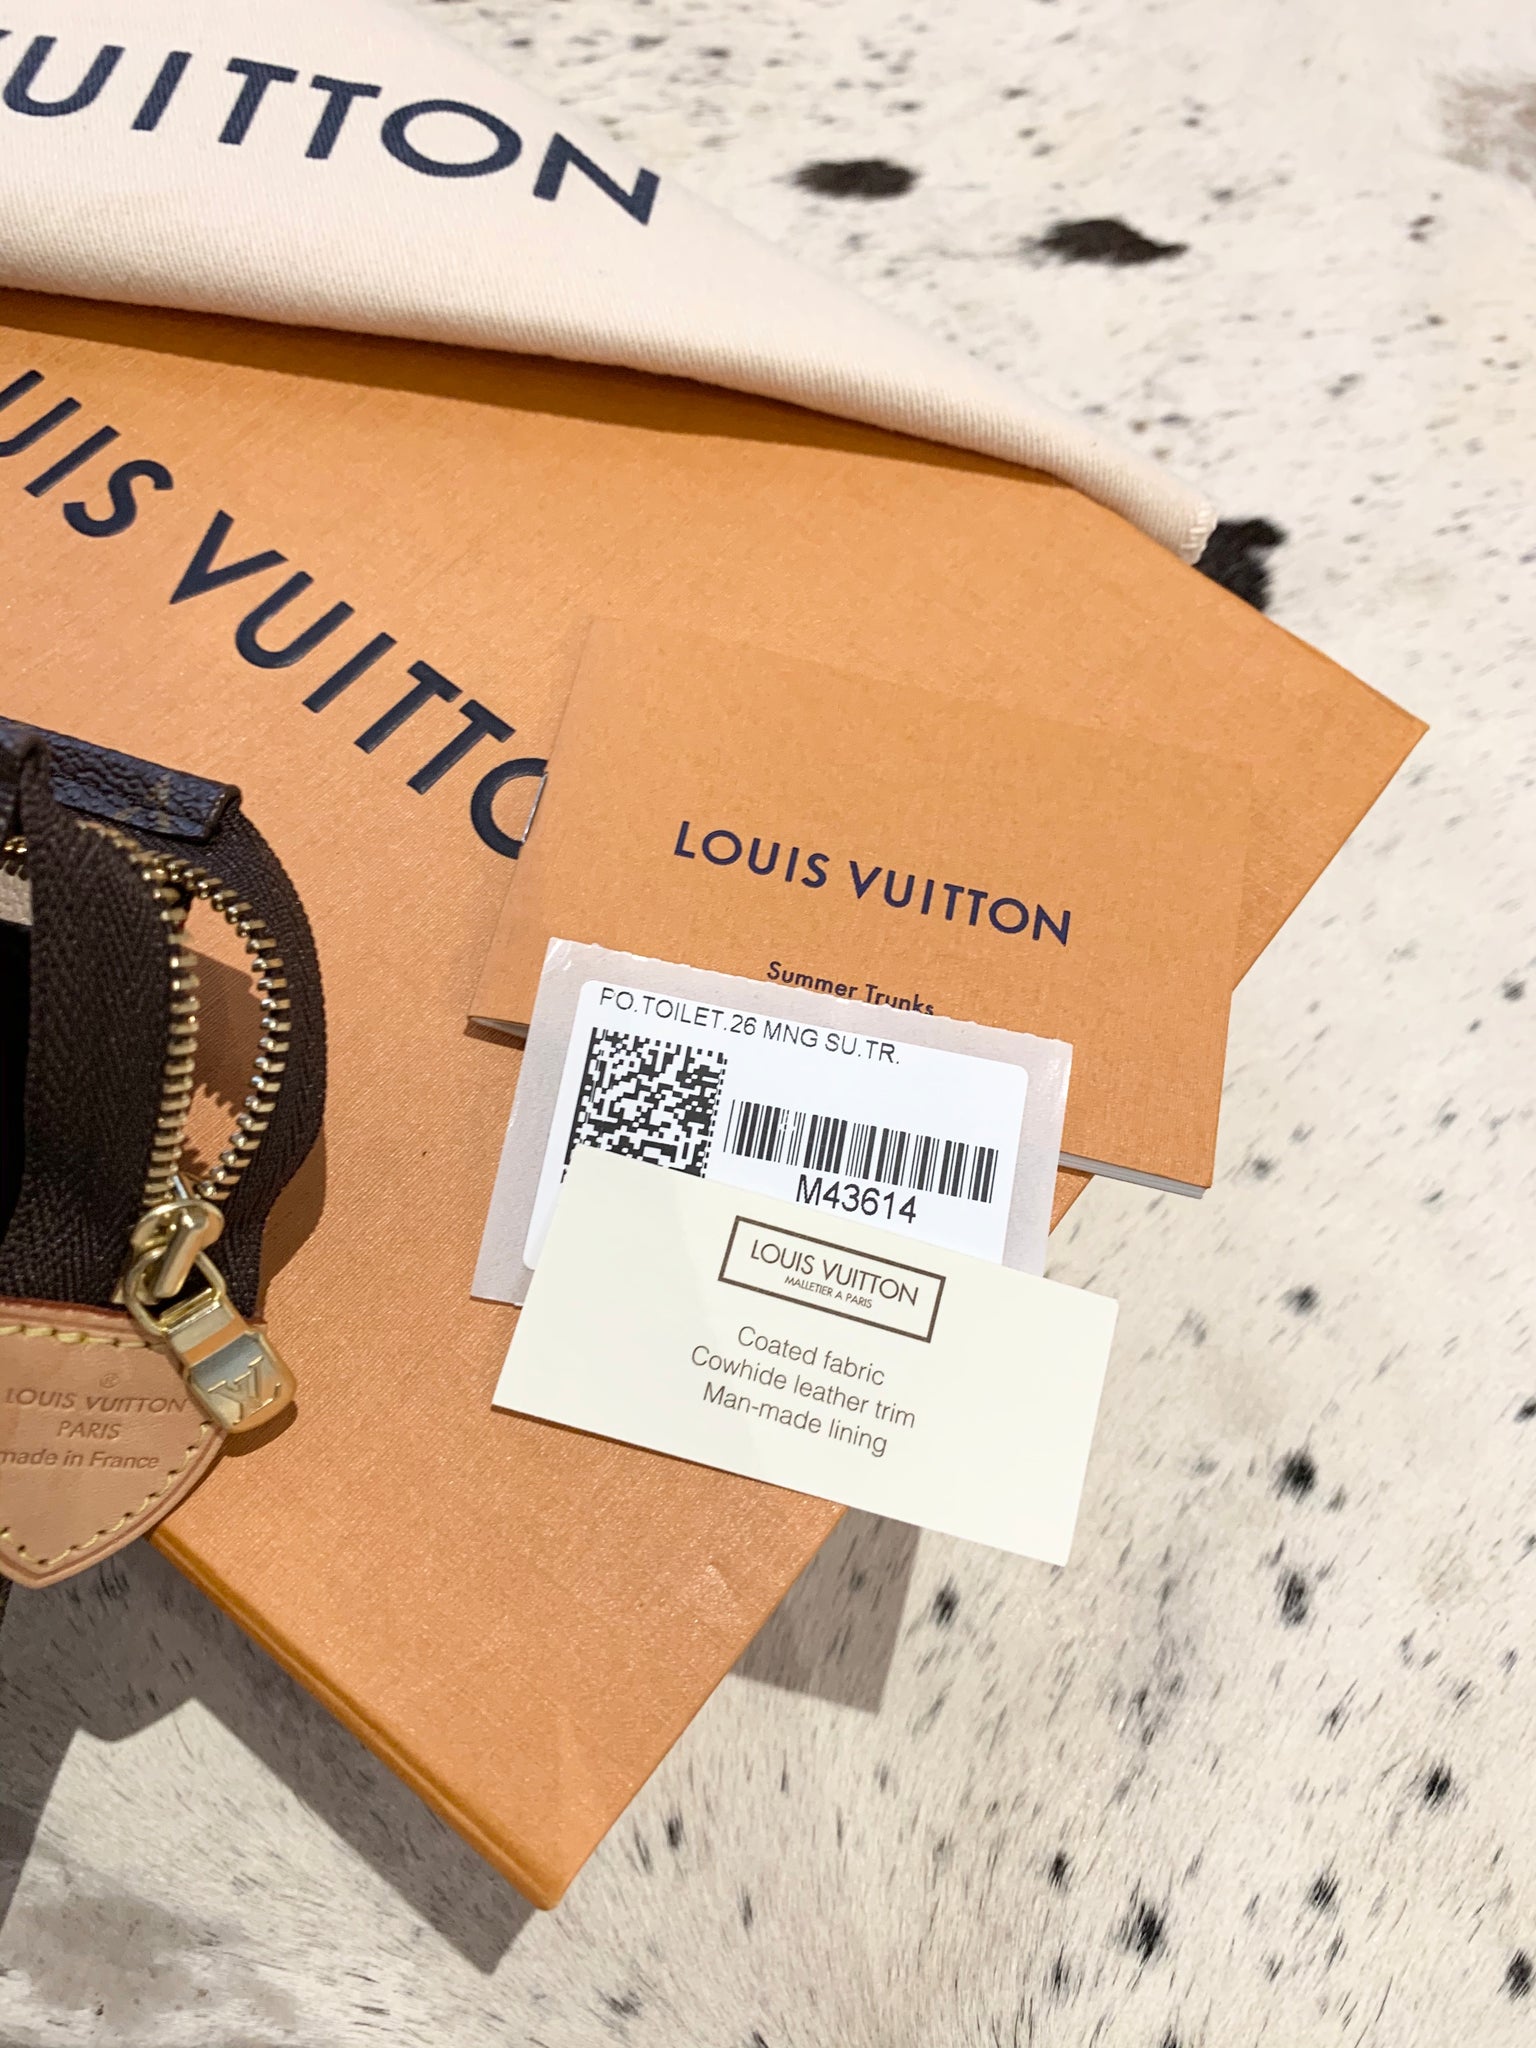 NEW IN BOX Louis Vuitton SUMMER TRUNKS Toiletry 26 Pouch Pouchette